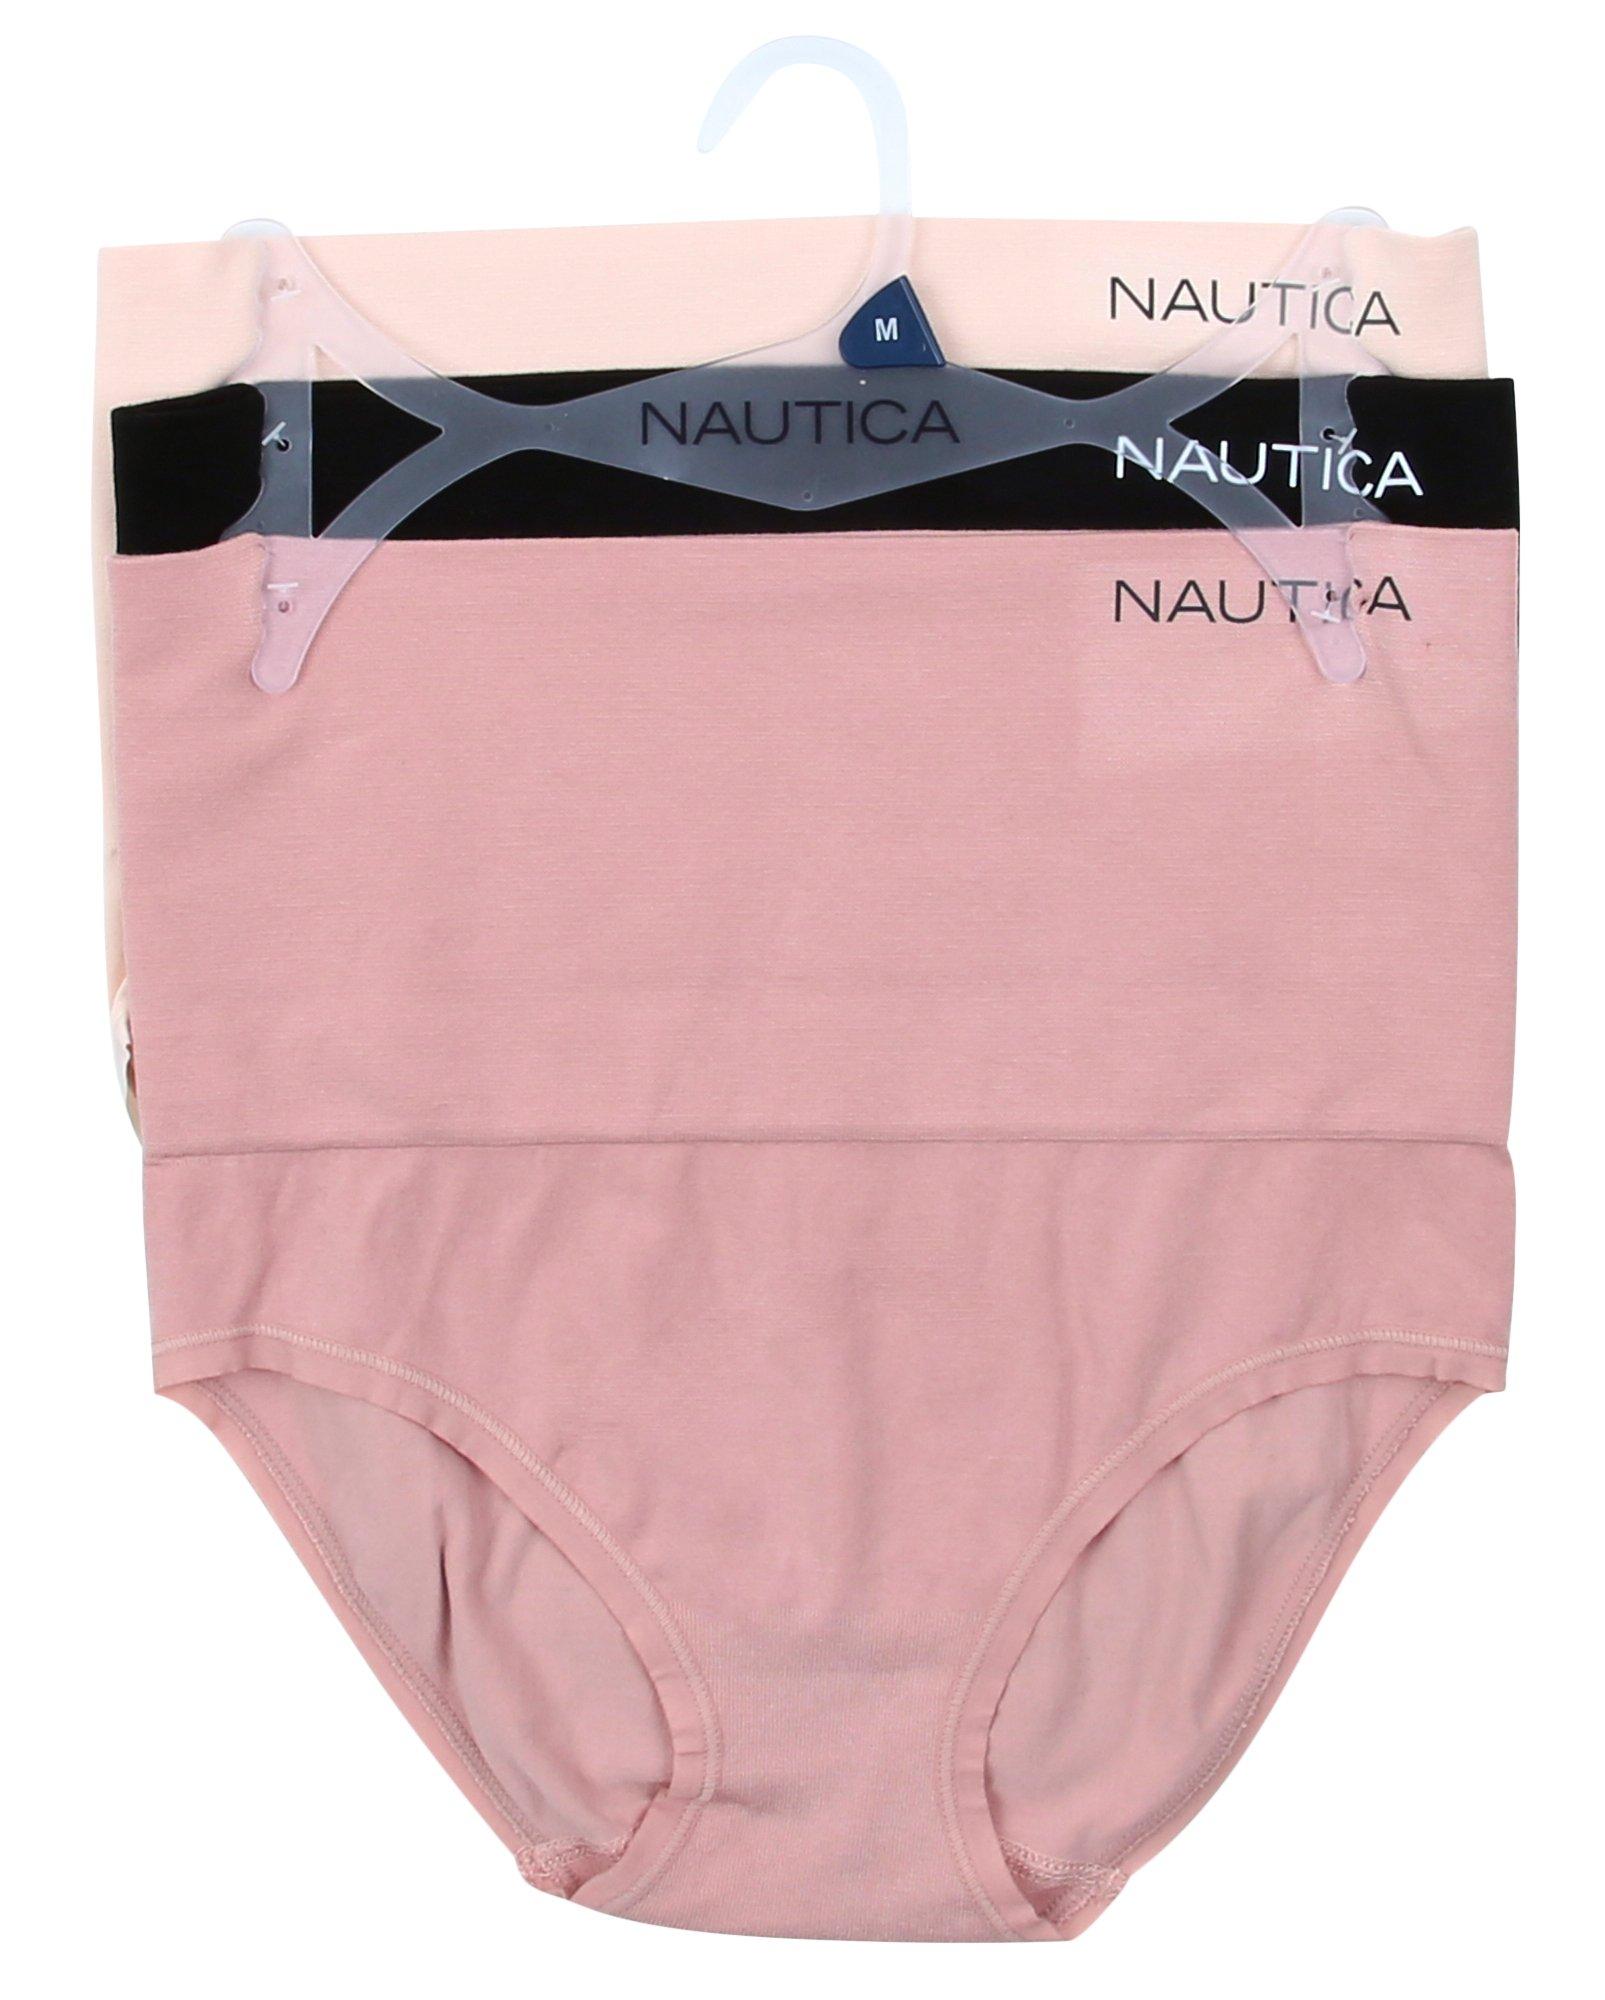 Nautica, Intimates & Sleepwear, Nautica 3pack Super Soft Seamless Slip  Shorts